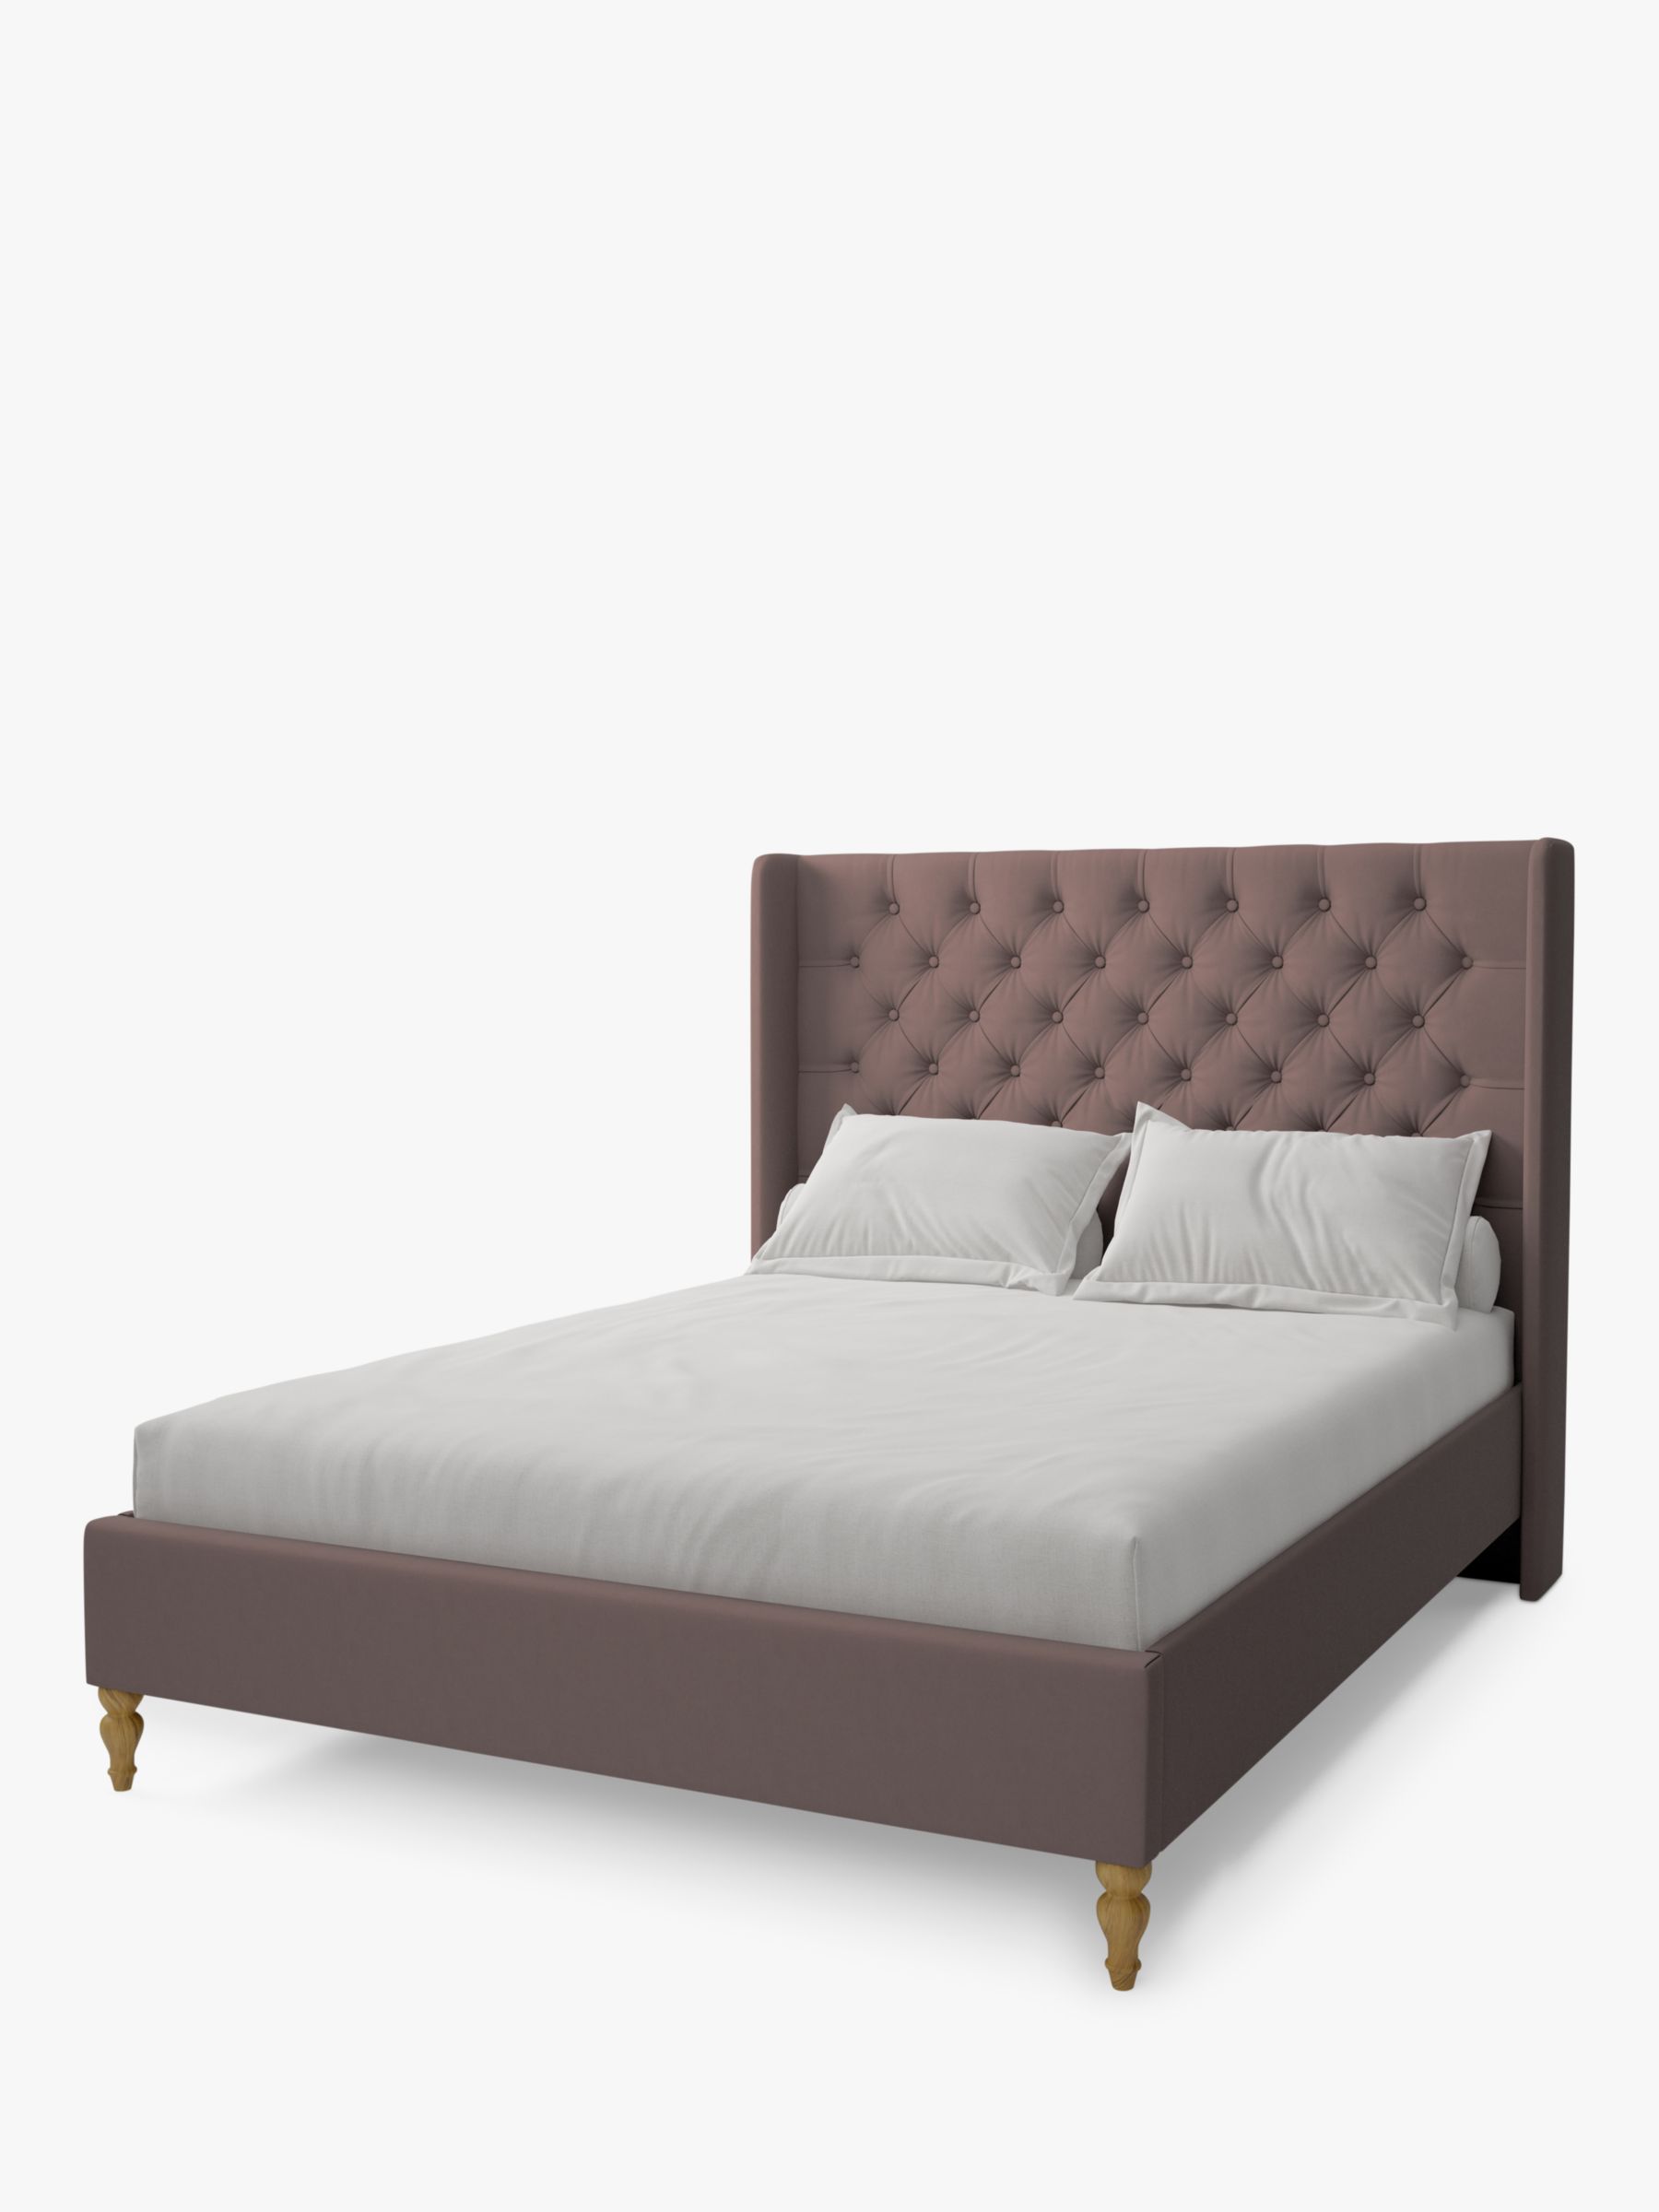 Koti Home Winged On Upholstered Bed, Full Size Upholstered Bed Frame